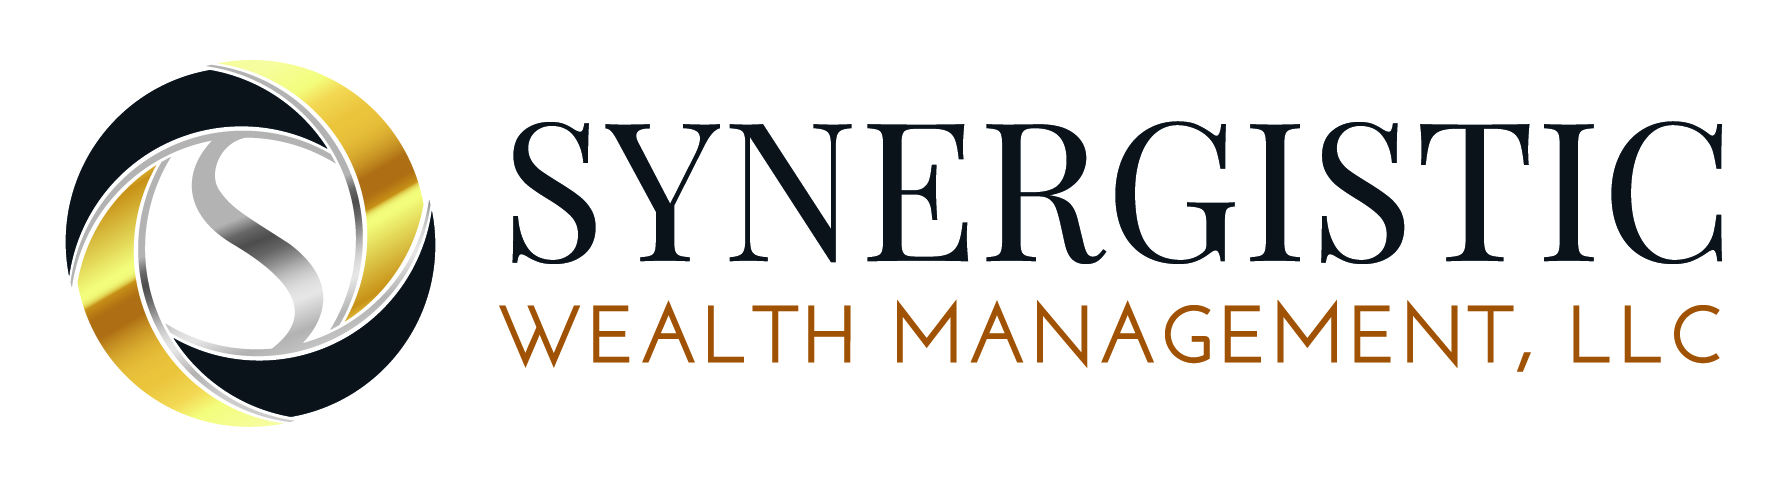 Synergistic Wealth Management LLC